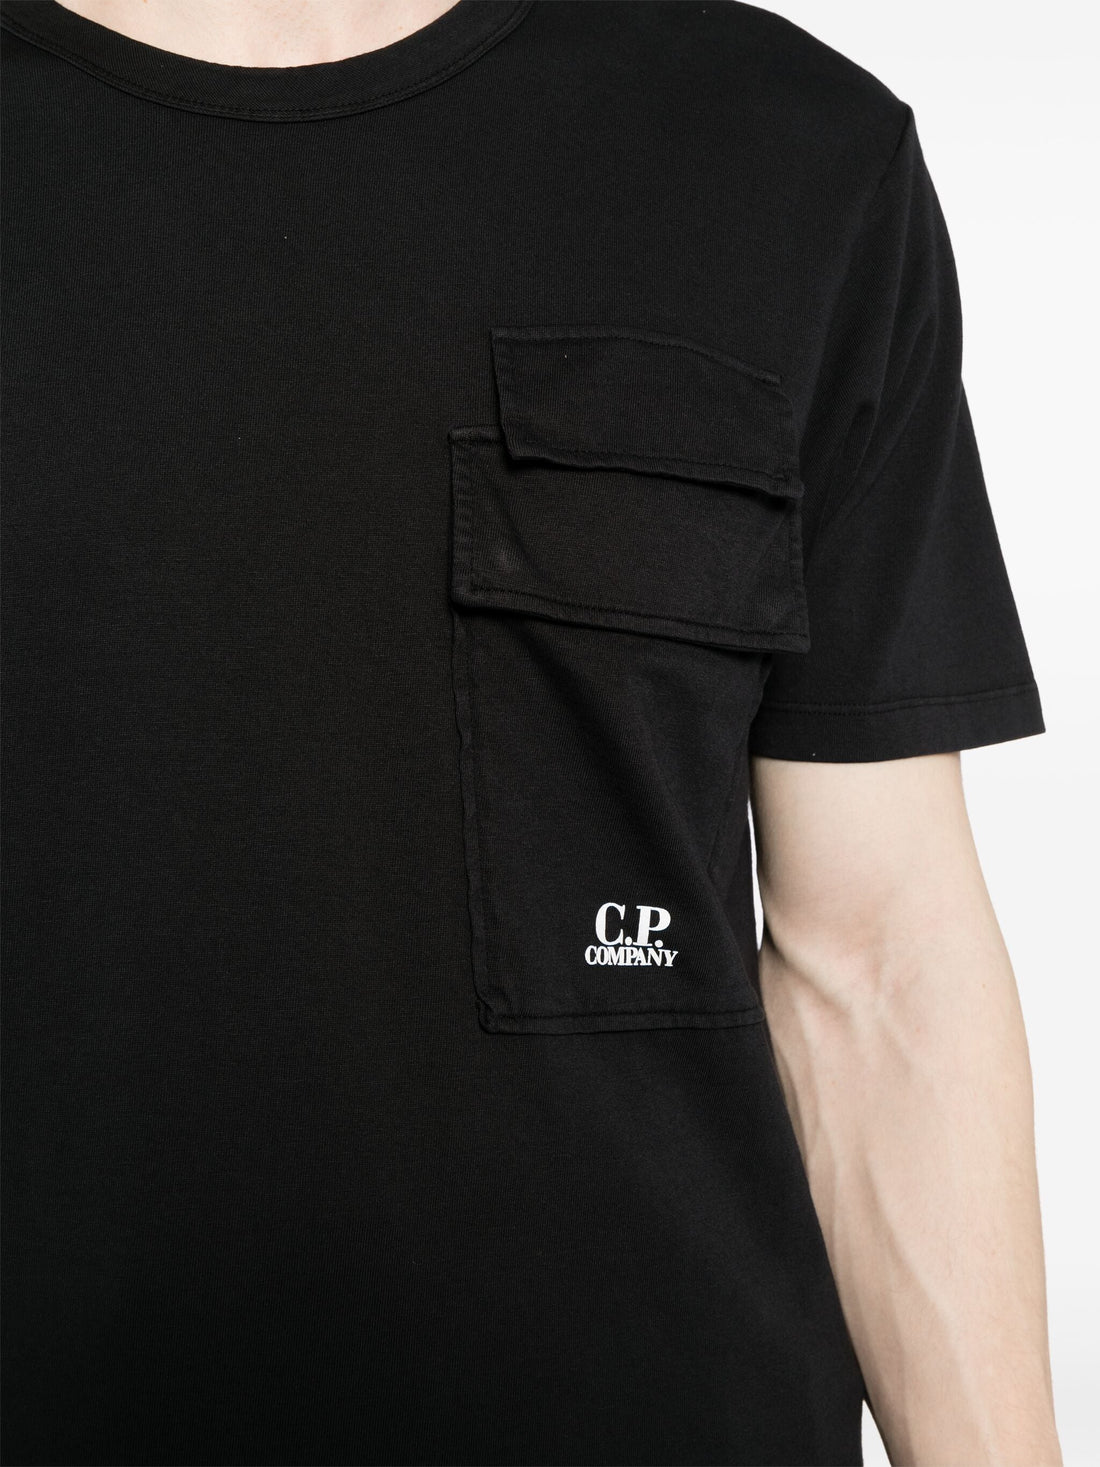 C.P. COMPANY Logo Graphic Print Pocket Cotton T-Shirt Black - MAISONDEFASHION.COM